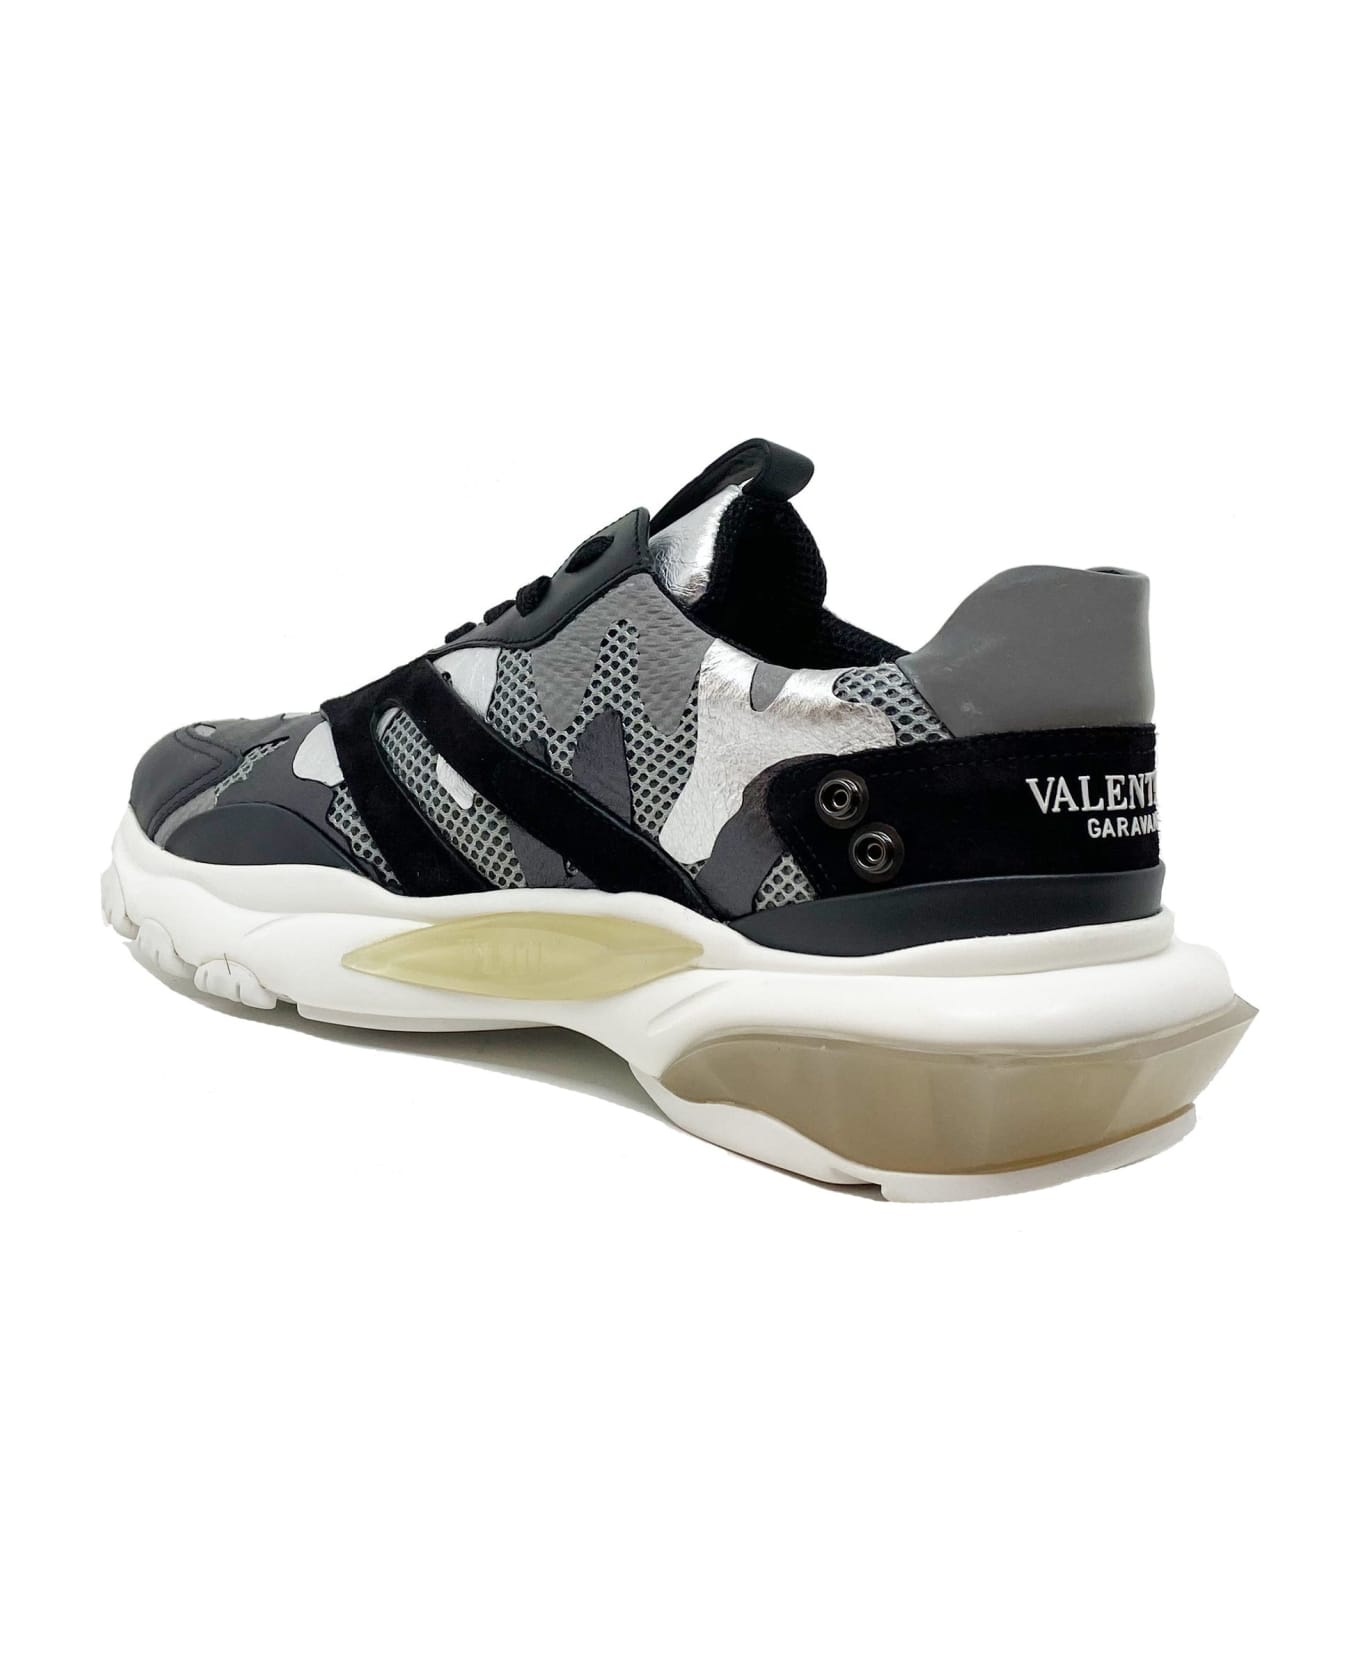 Valentino Garavani Bounce Leather Sneakers - Black